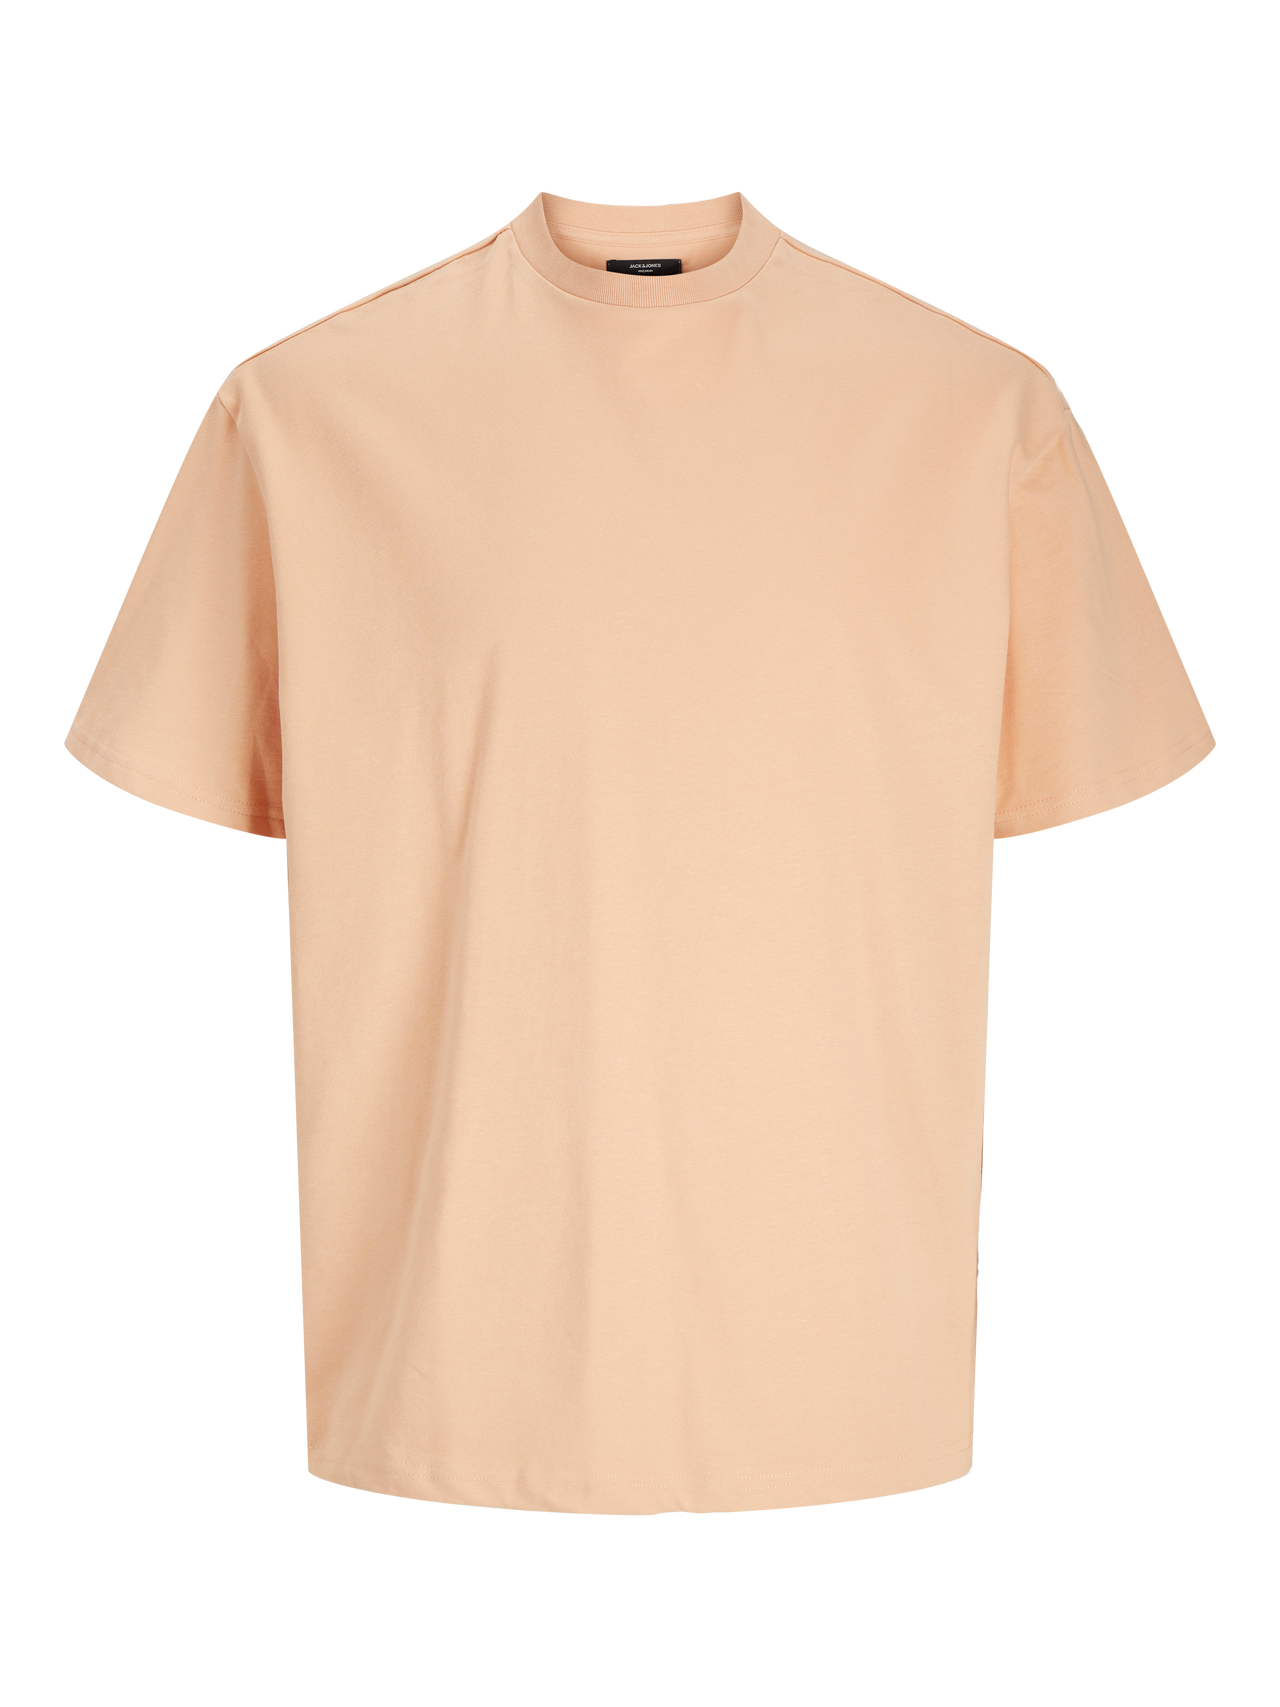 Jack & Jones Camiseta Liso Cuello redondo -Peach Nougat  - 12255176